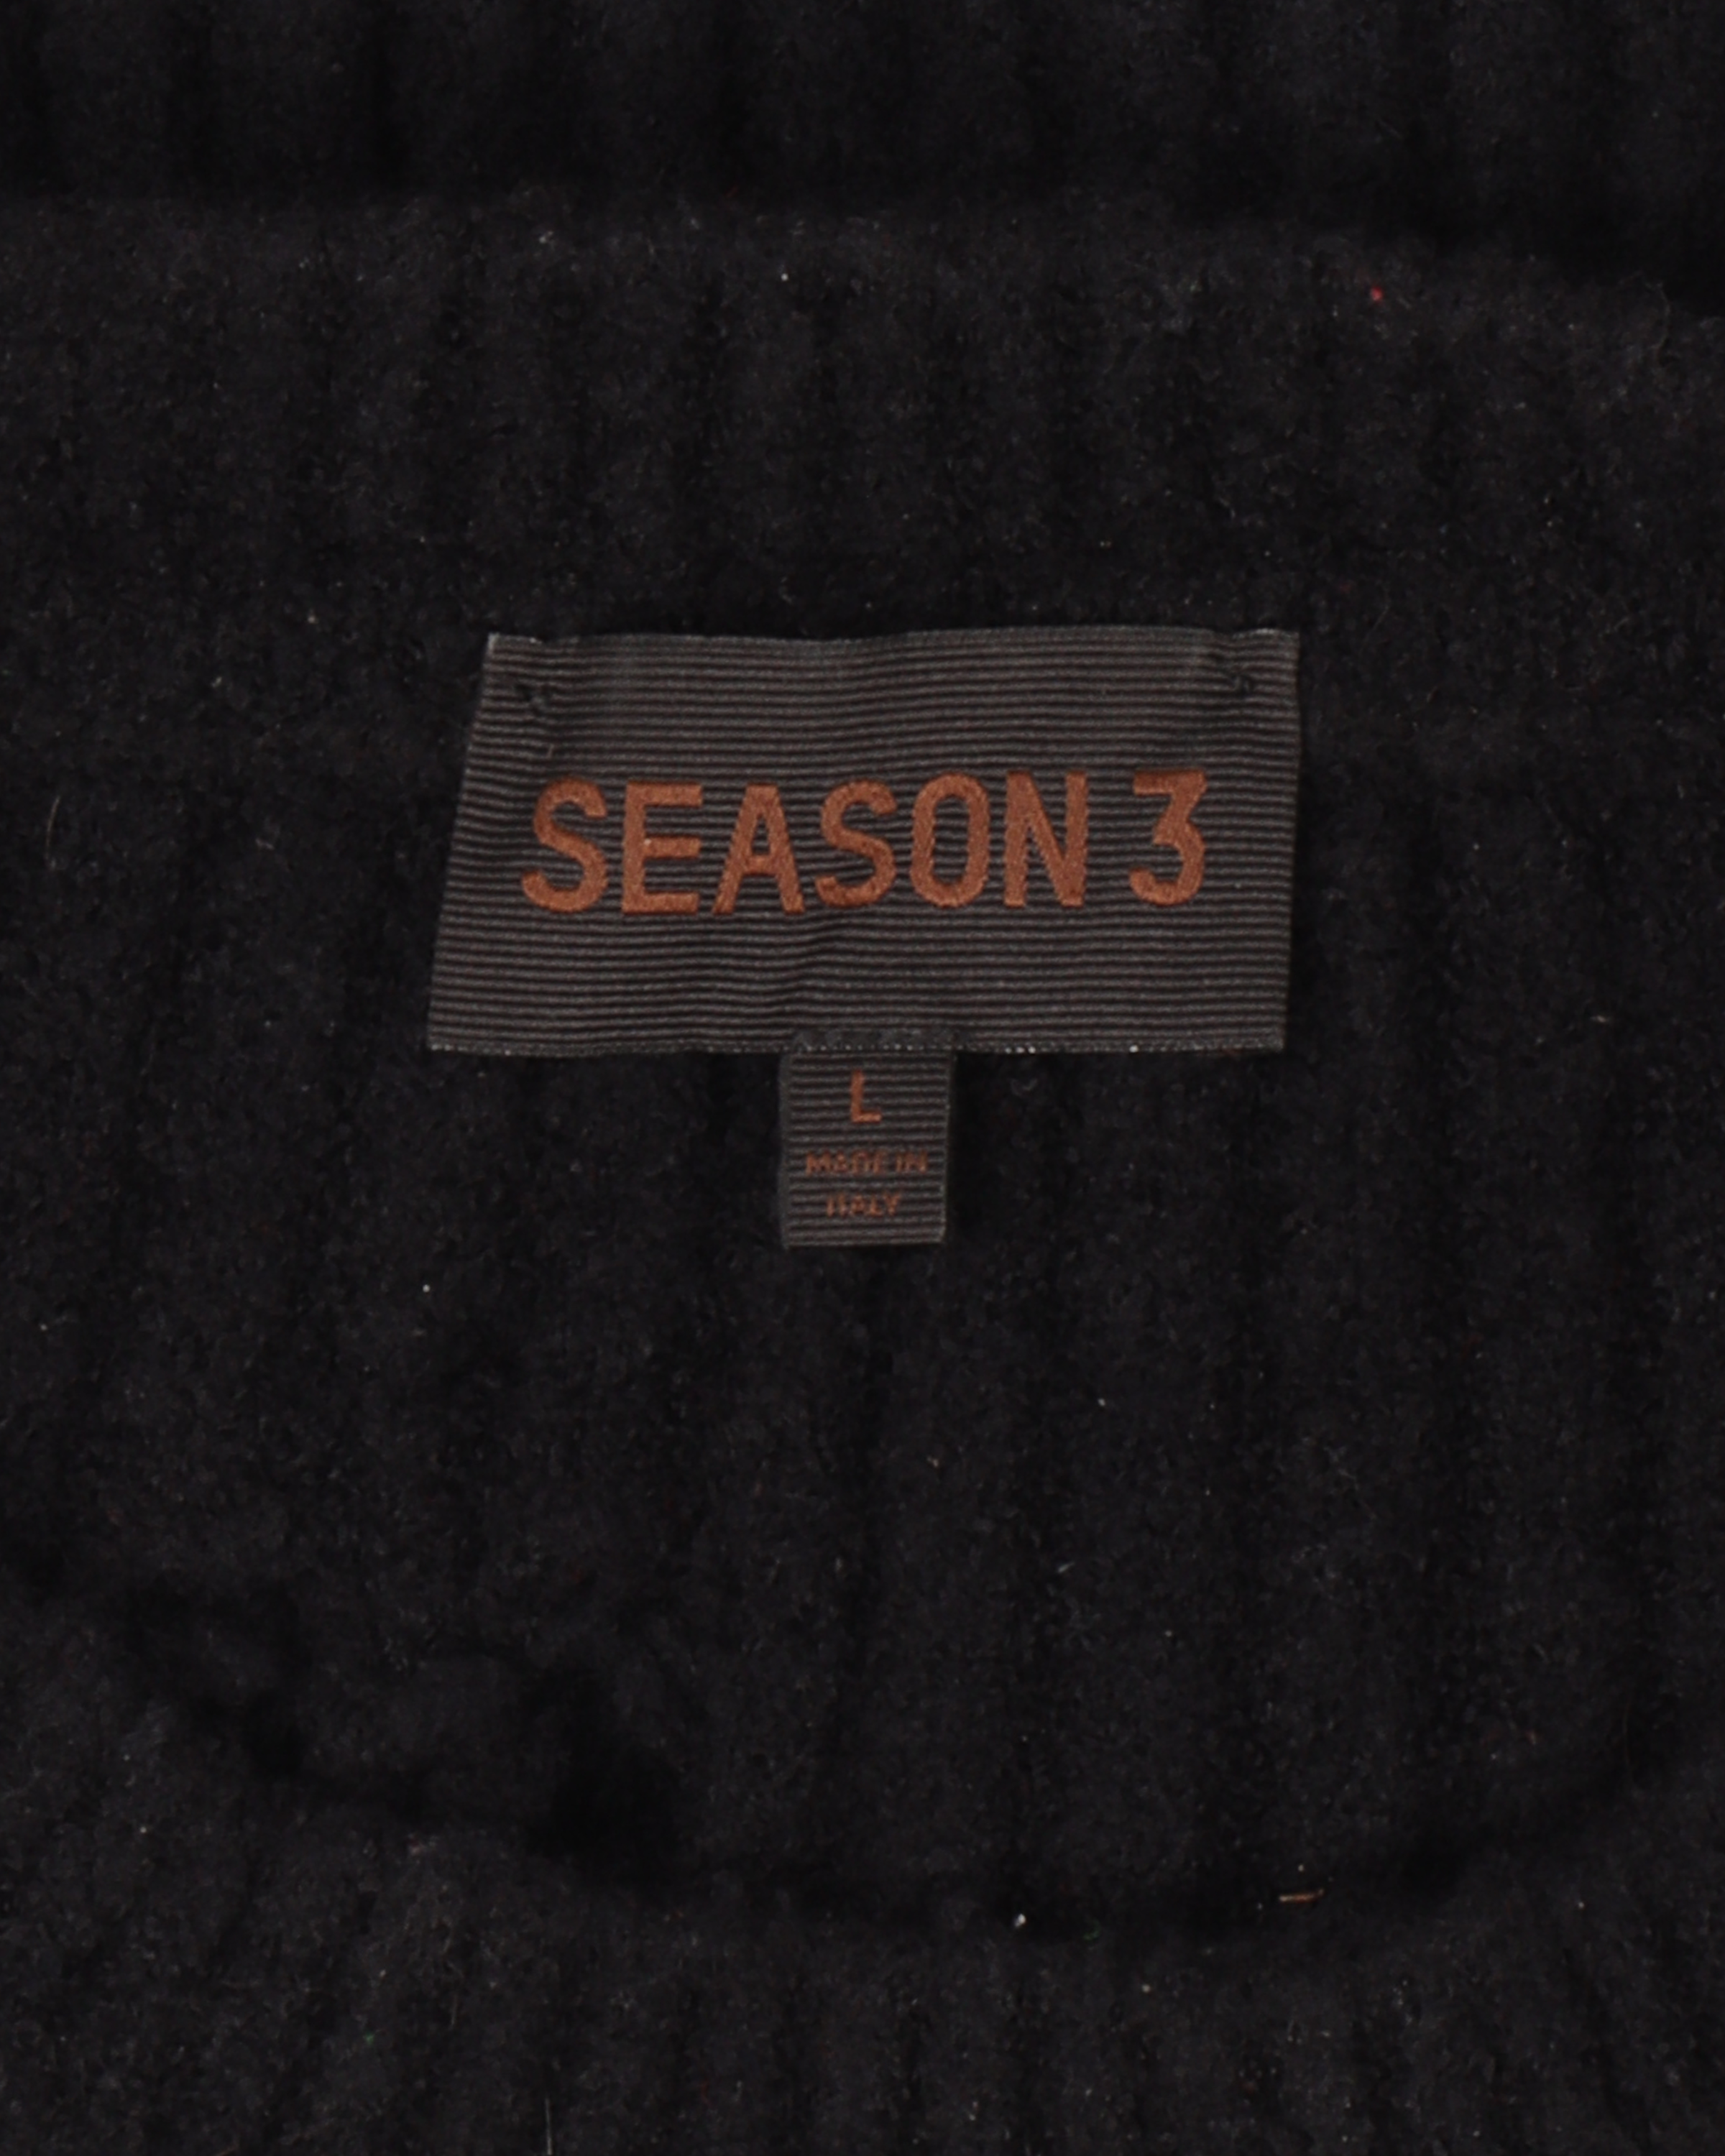 Season 3 Distressed Sweater